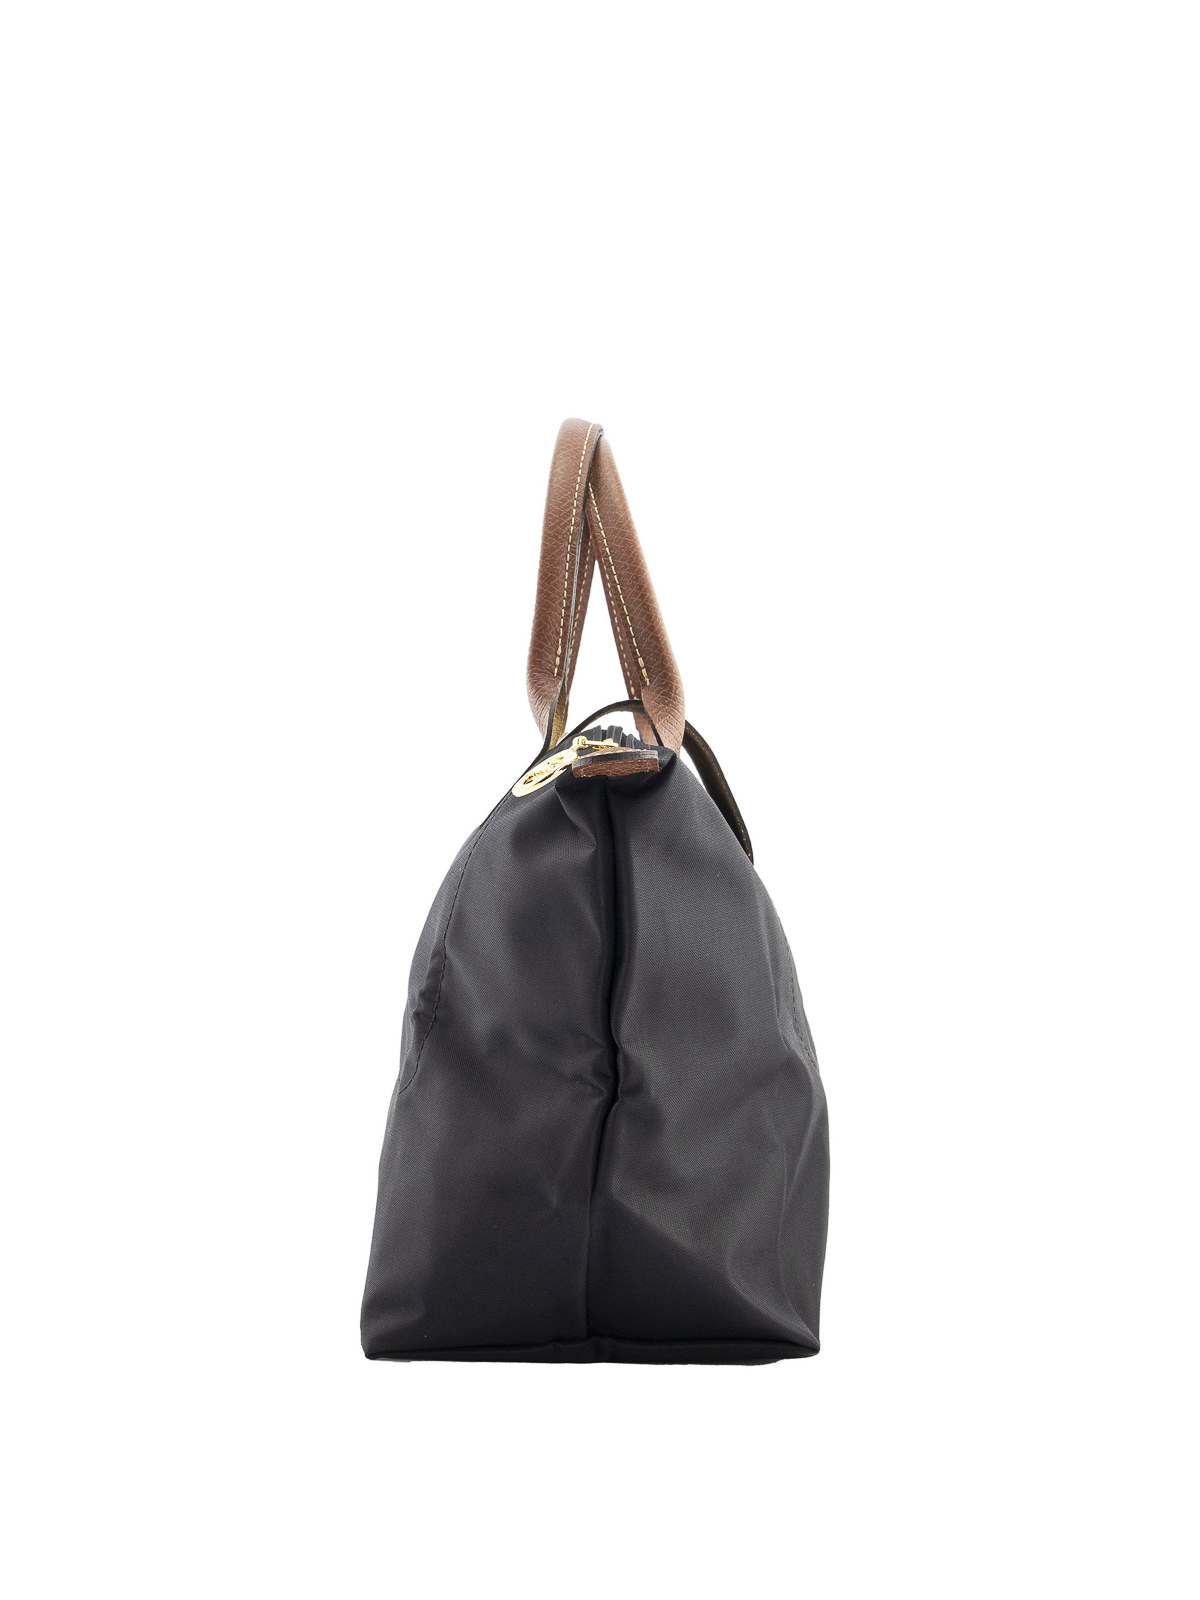 Le Pliage Original Hobo bag Black